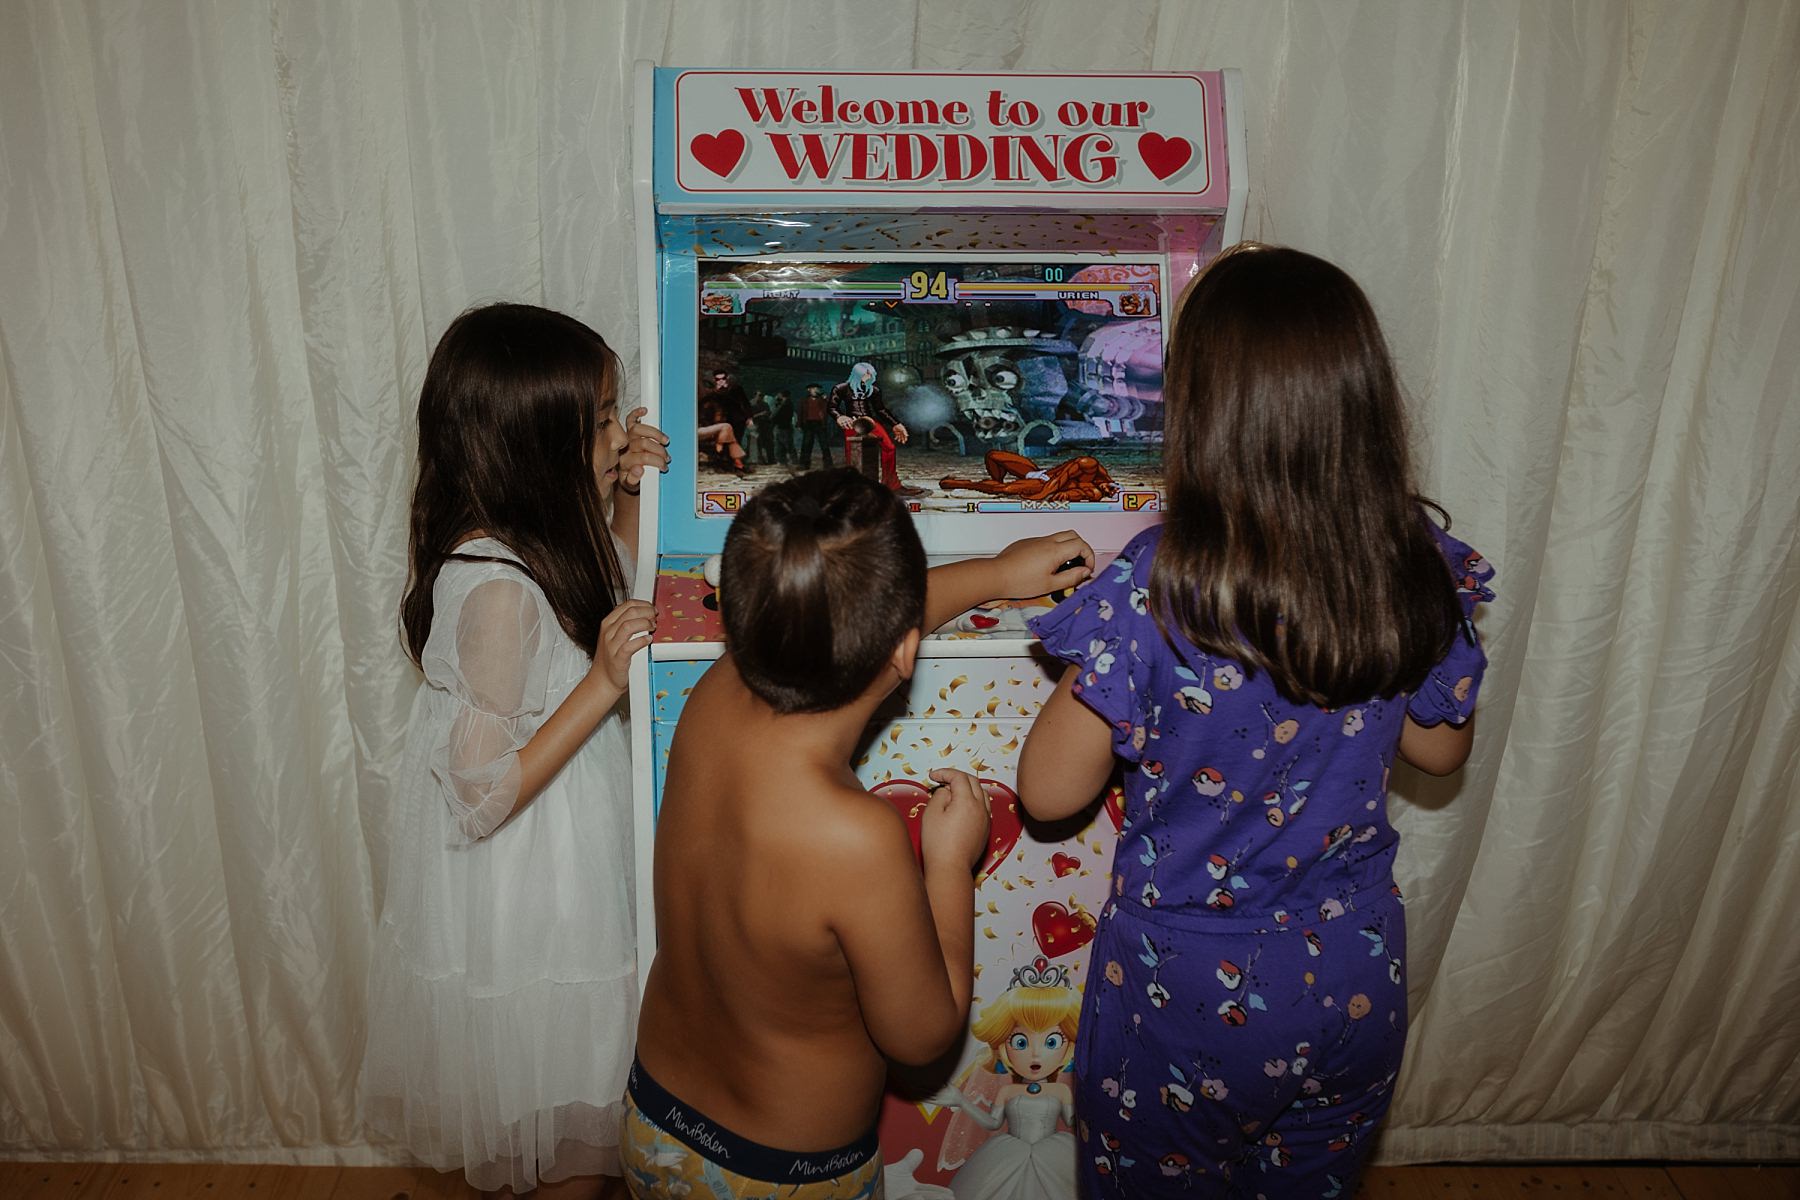 cluny castle wedding scotland reception with video games retro arcade games for guests